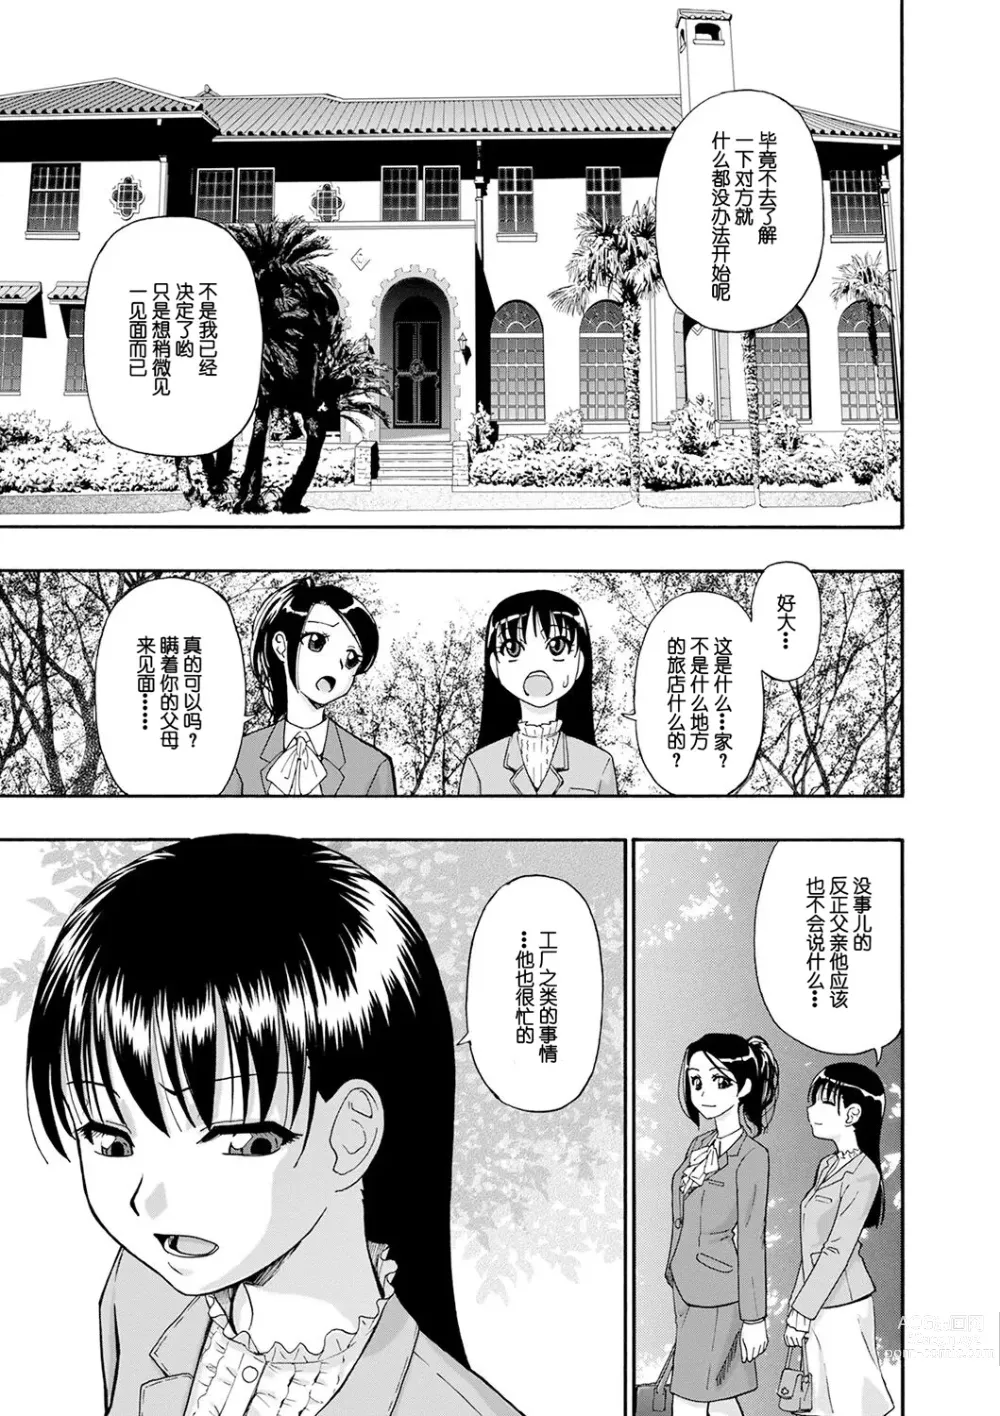 Page 9 of manga Chikushou Bara - The Chikushou Bara